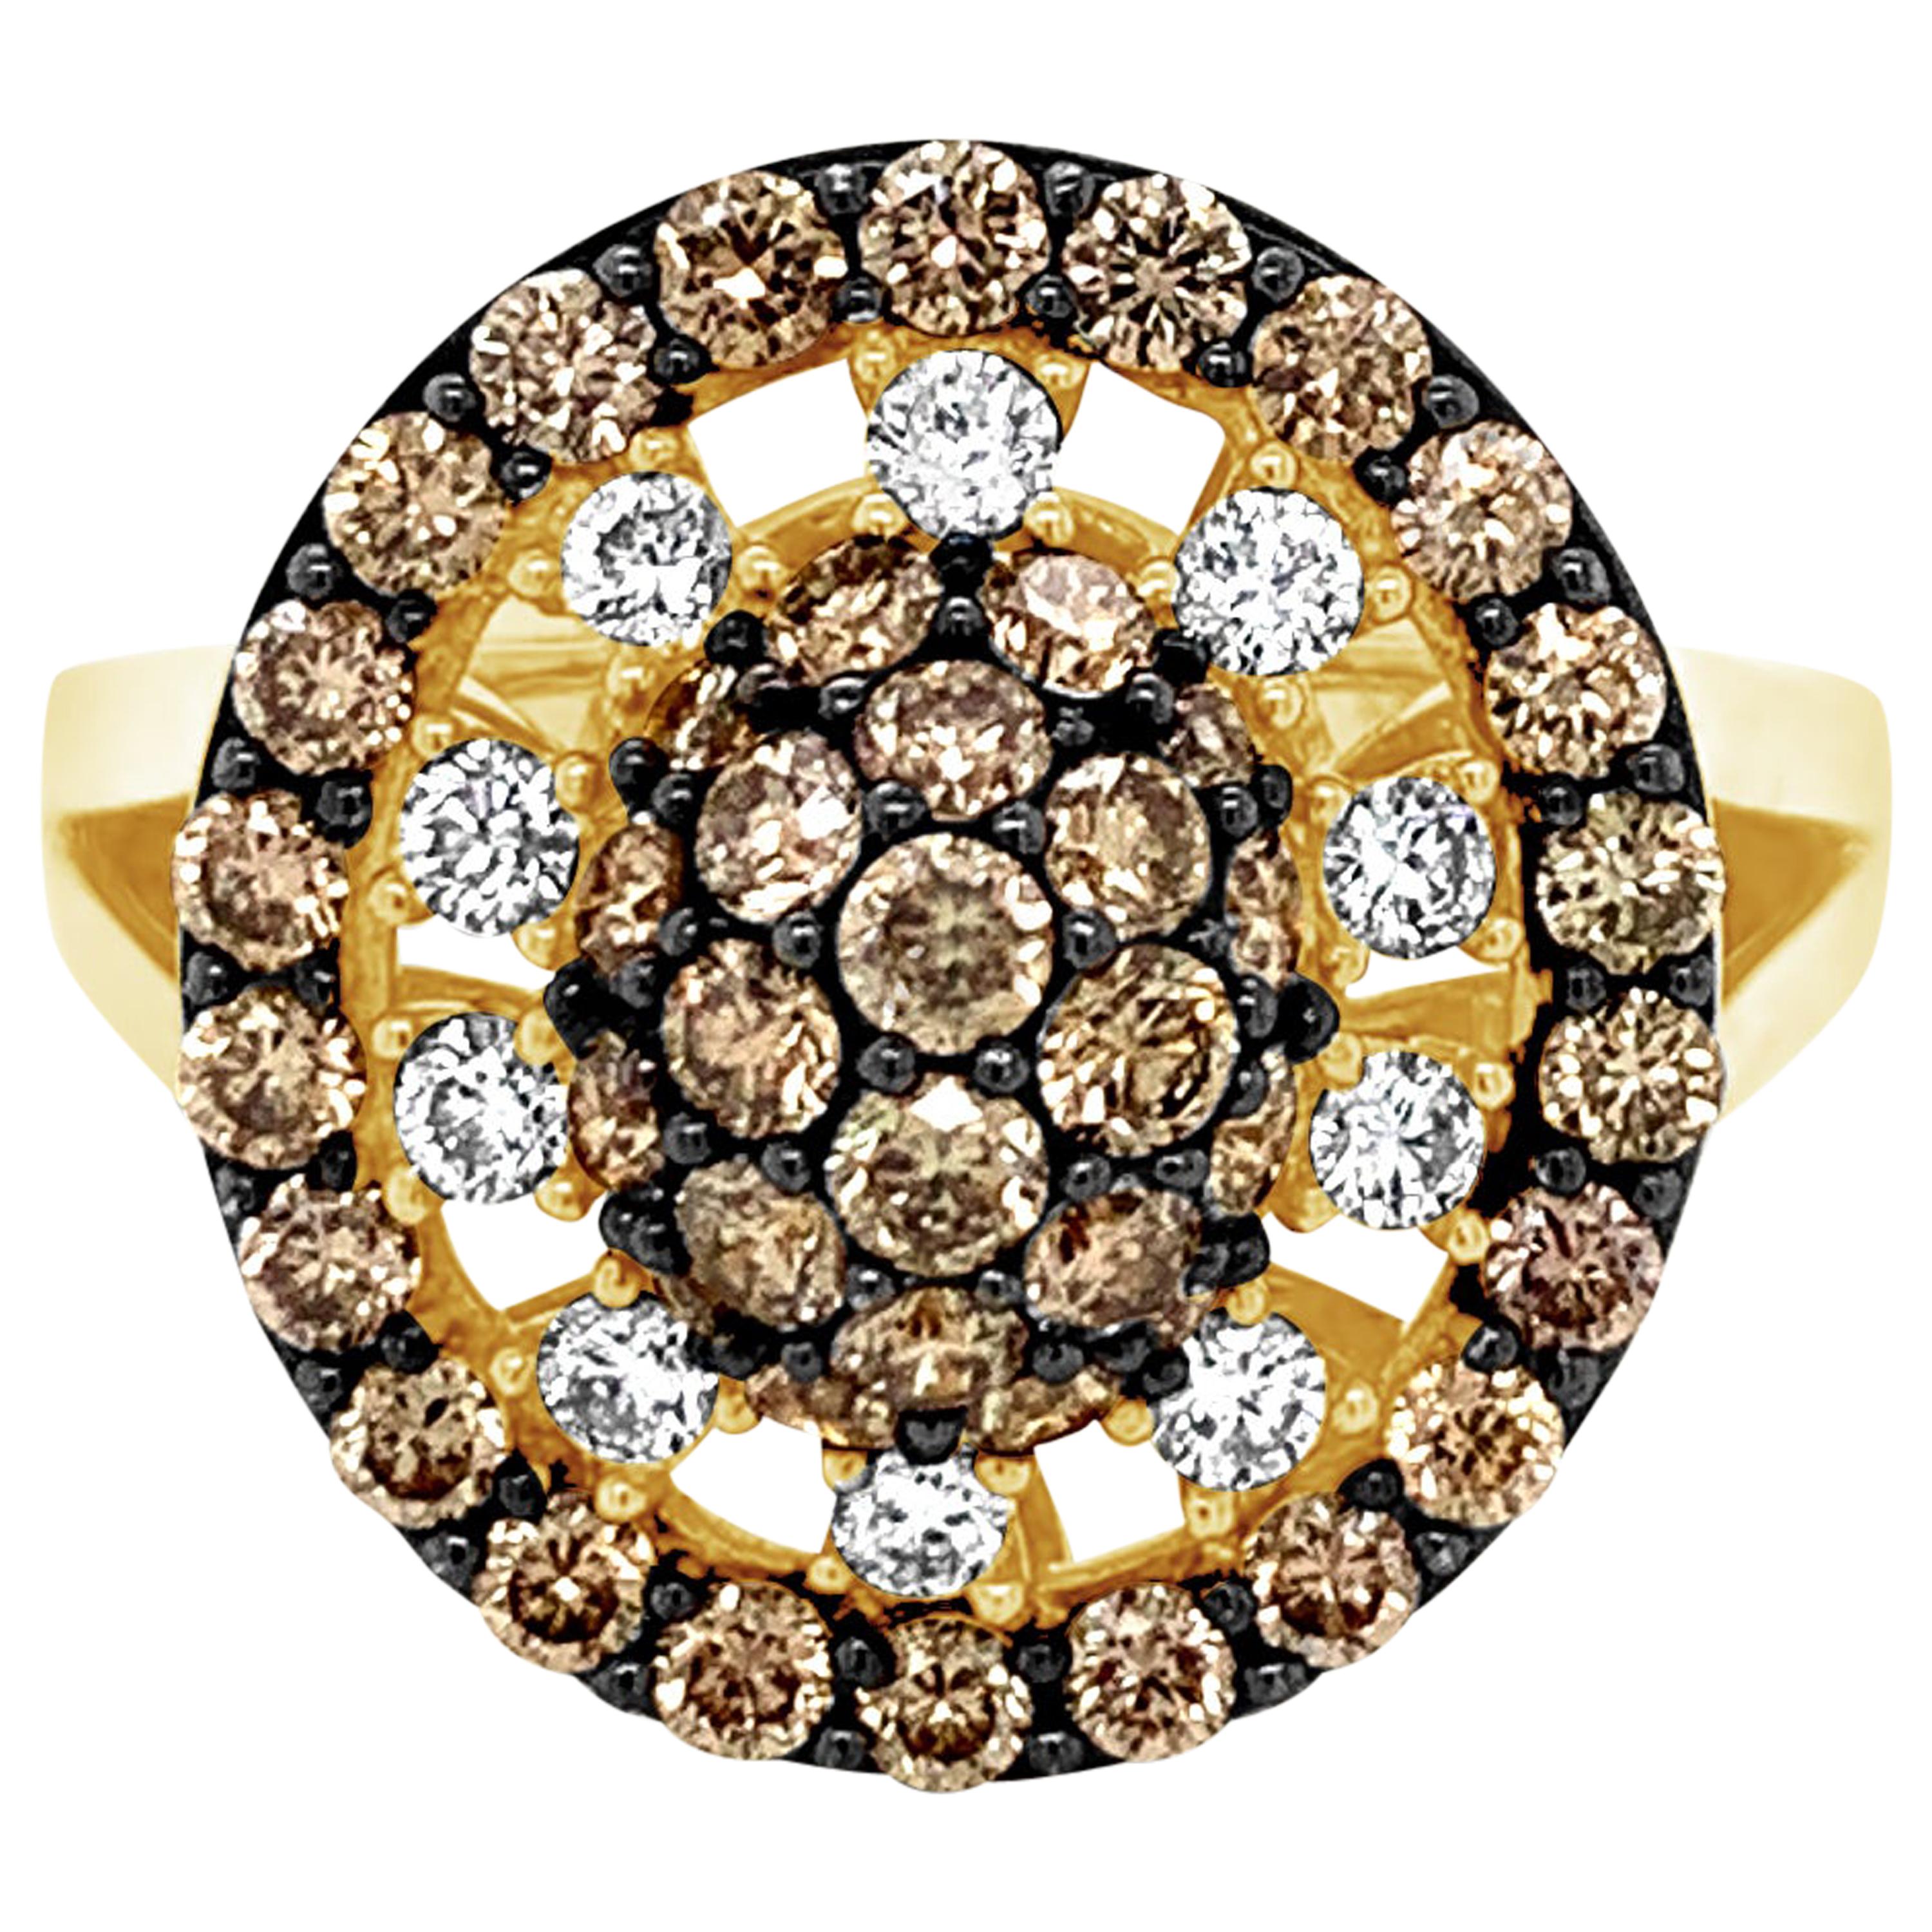 Le Vian Ring Featuring Chocolate Diamonds, Vanilla Diamonds, 14 Karat Honey Gold